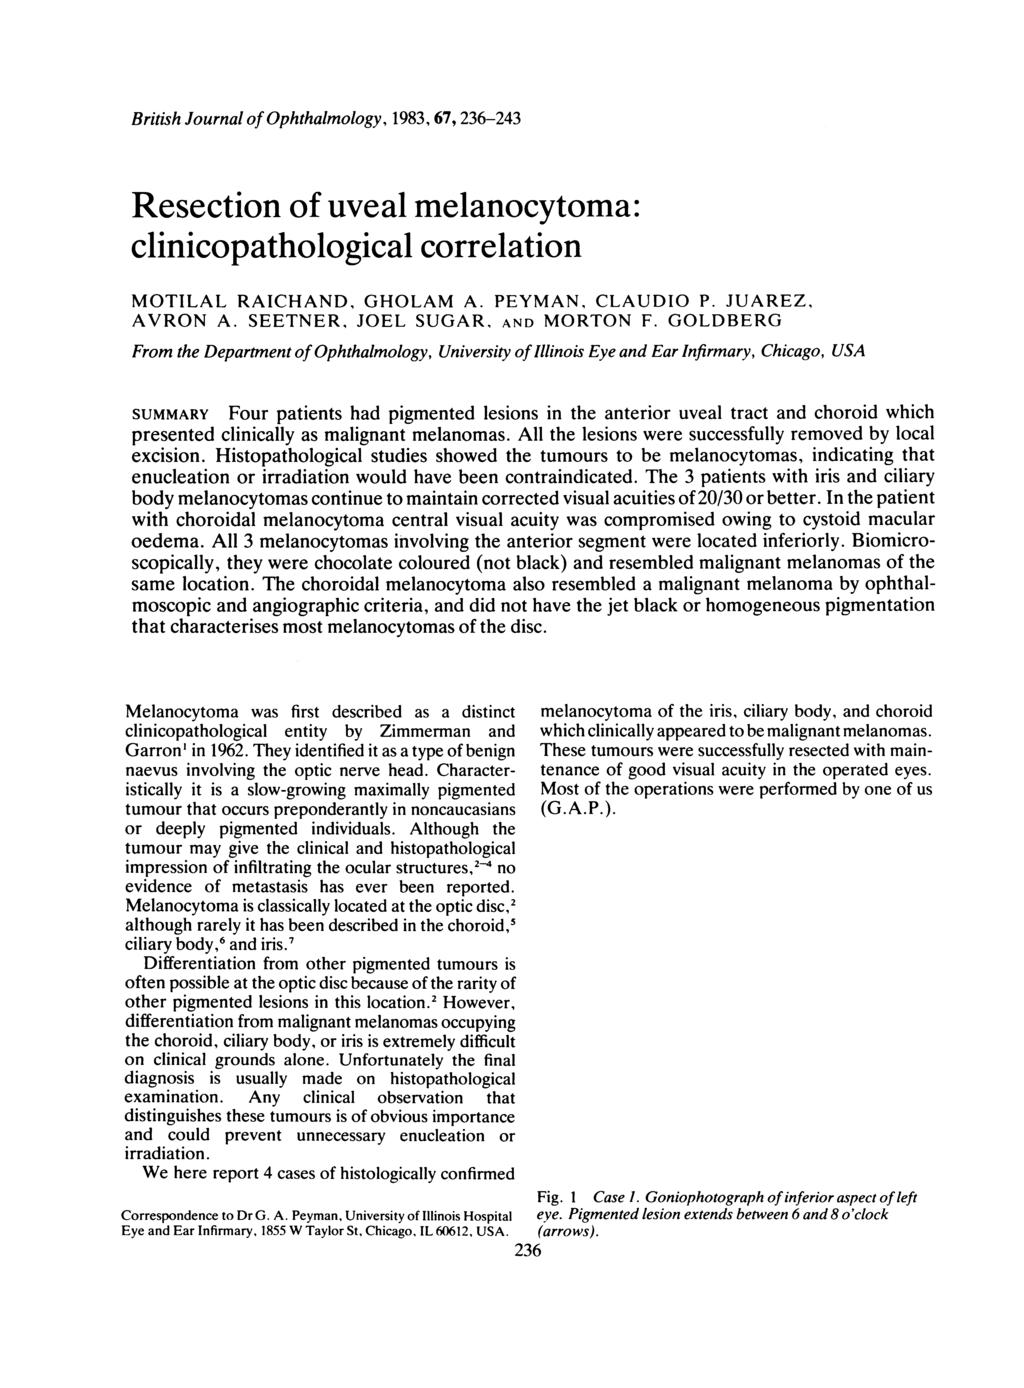 British Journal of Ophthalmology, 1983, 67, 236-243 Resection of uveal melanocytoma: clinicopathological correlation MOTILAL RAICHAND, GHOLAM A. PEYMAN, CLAUDIO P. JUAREZ, AVRON A.